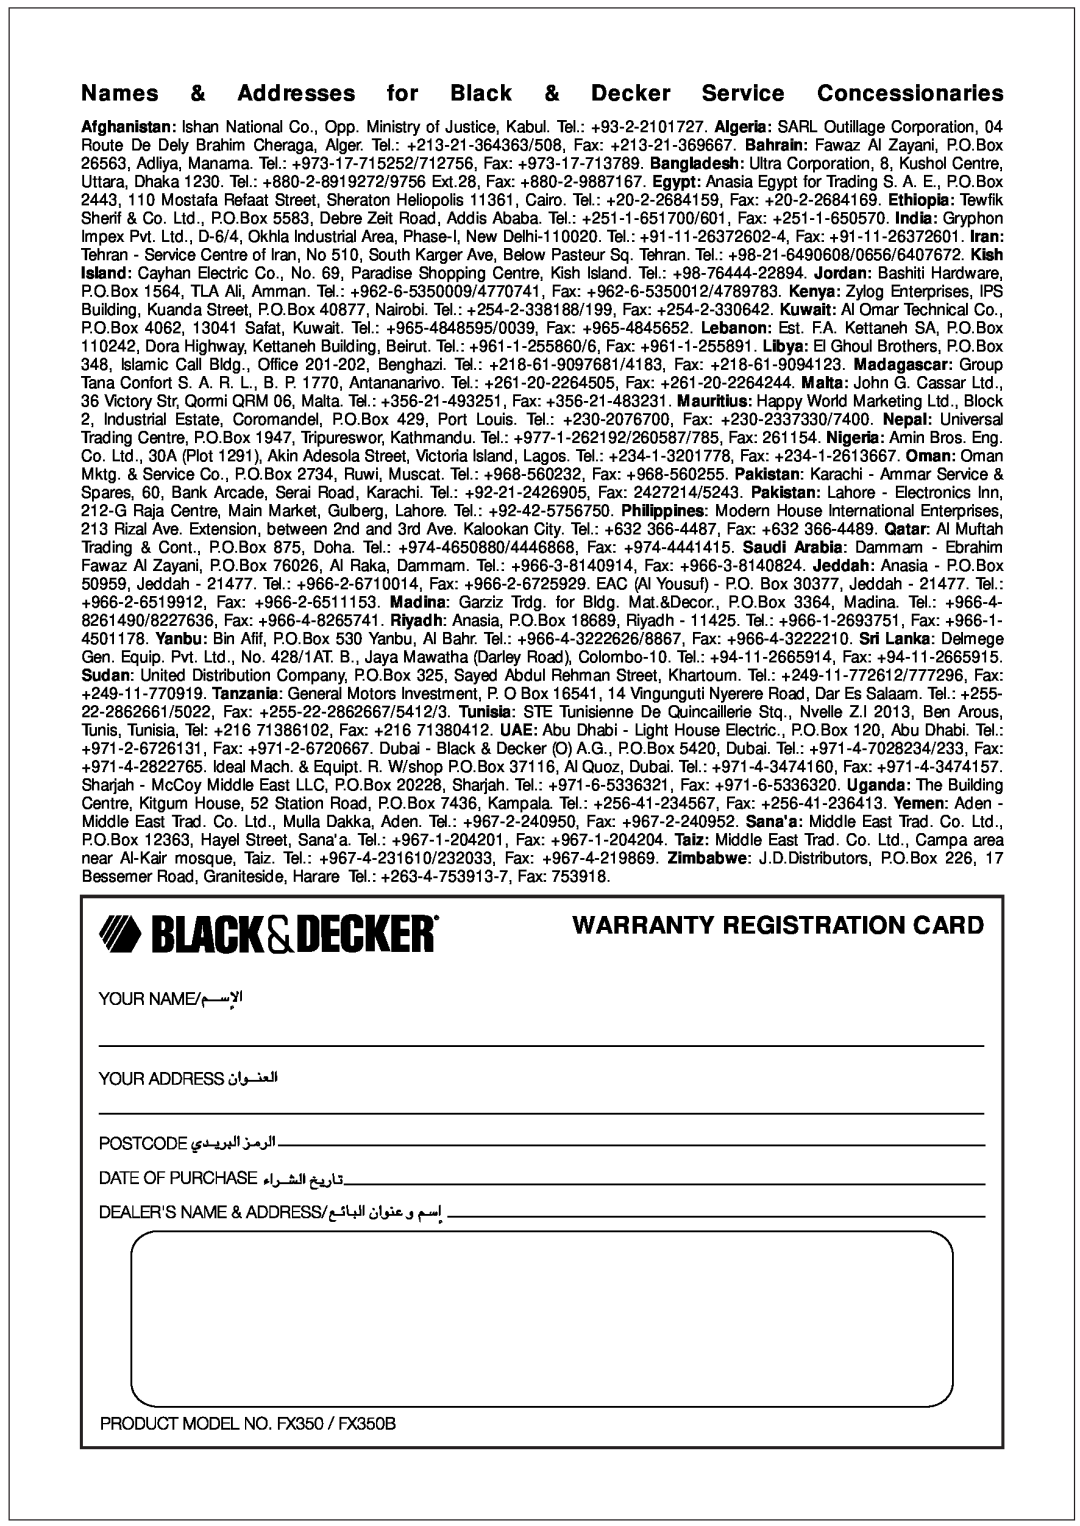 Black & Decker FX350B manual Warranty Registration Card 